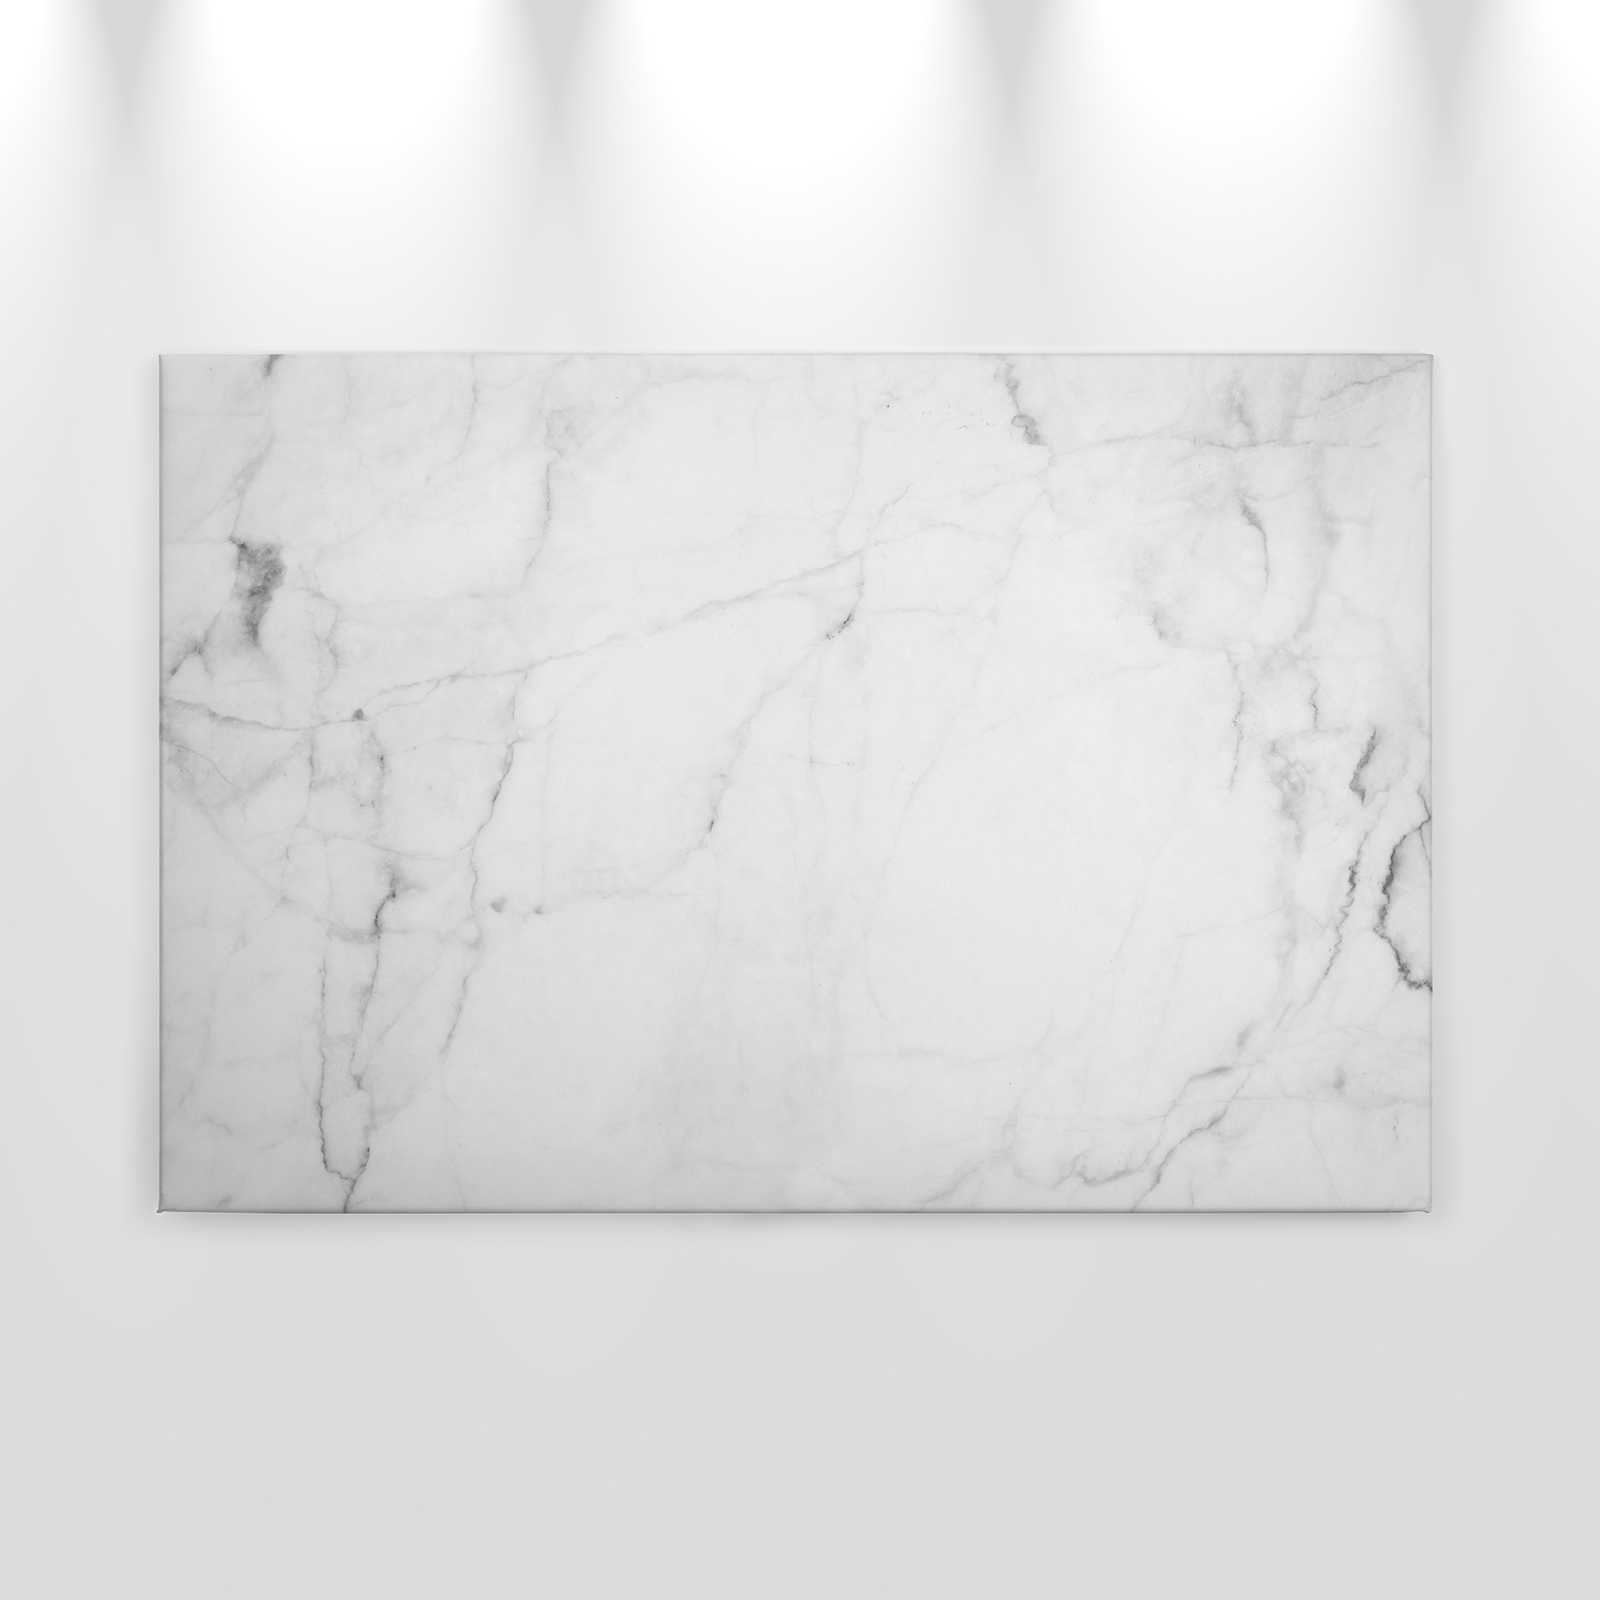             Canvas met subtiele marmerlook - 0,90 m x 0,60 m
        